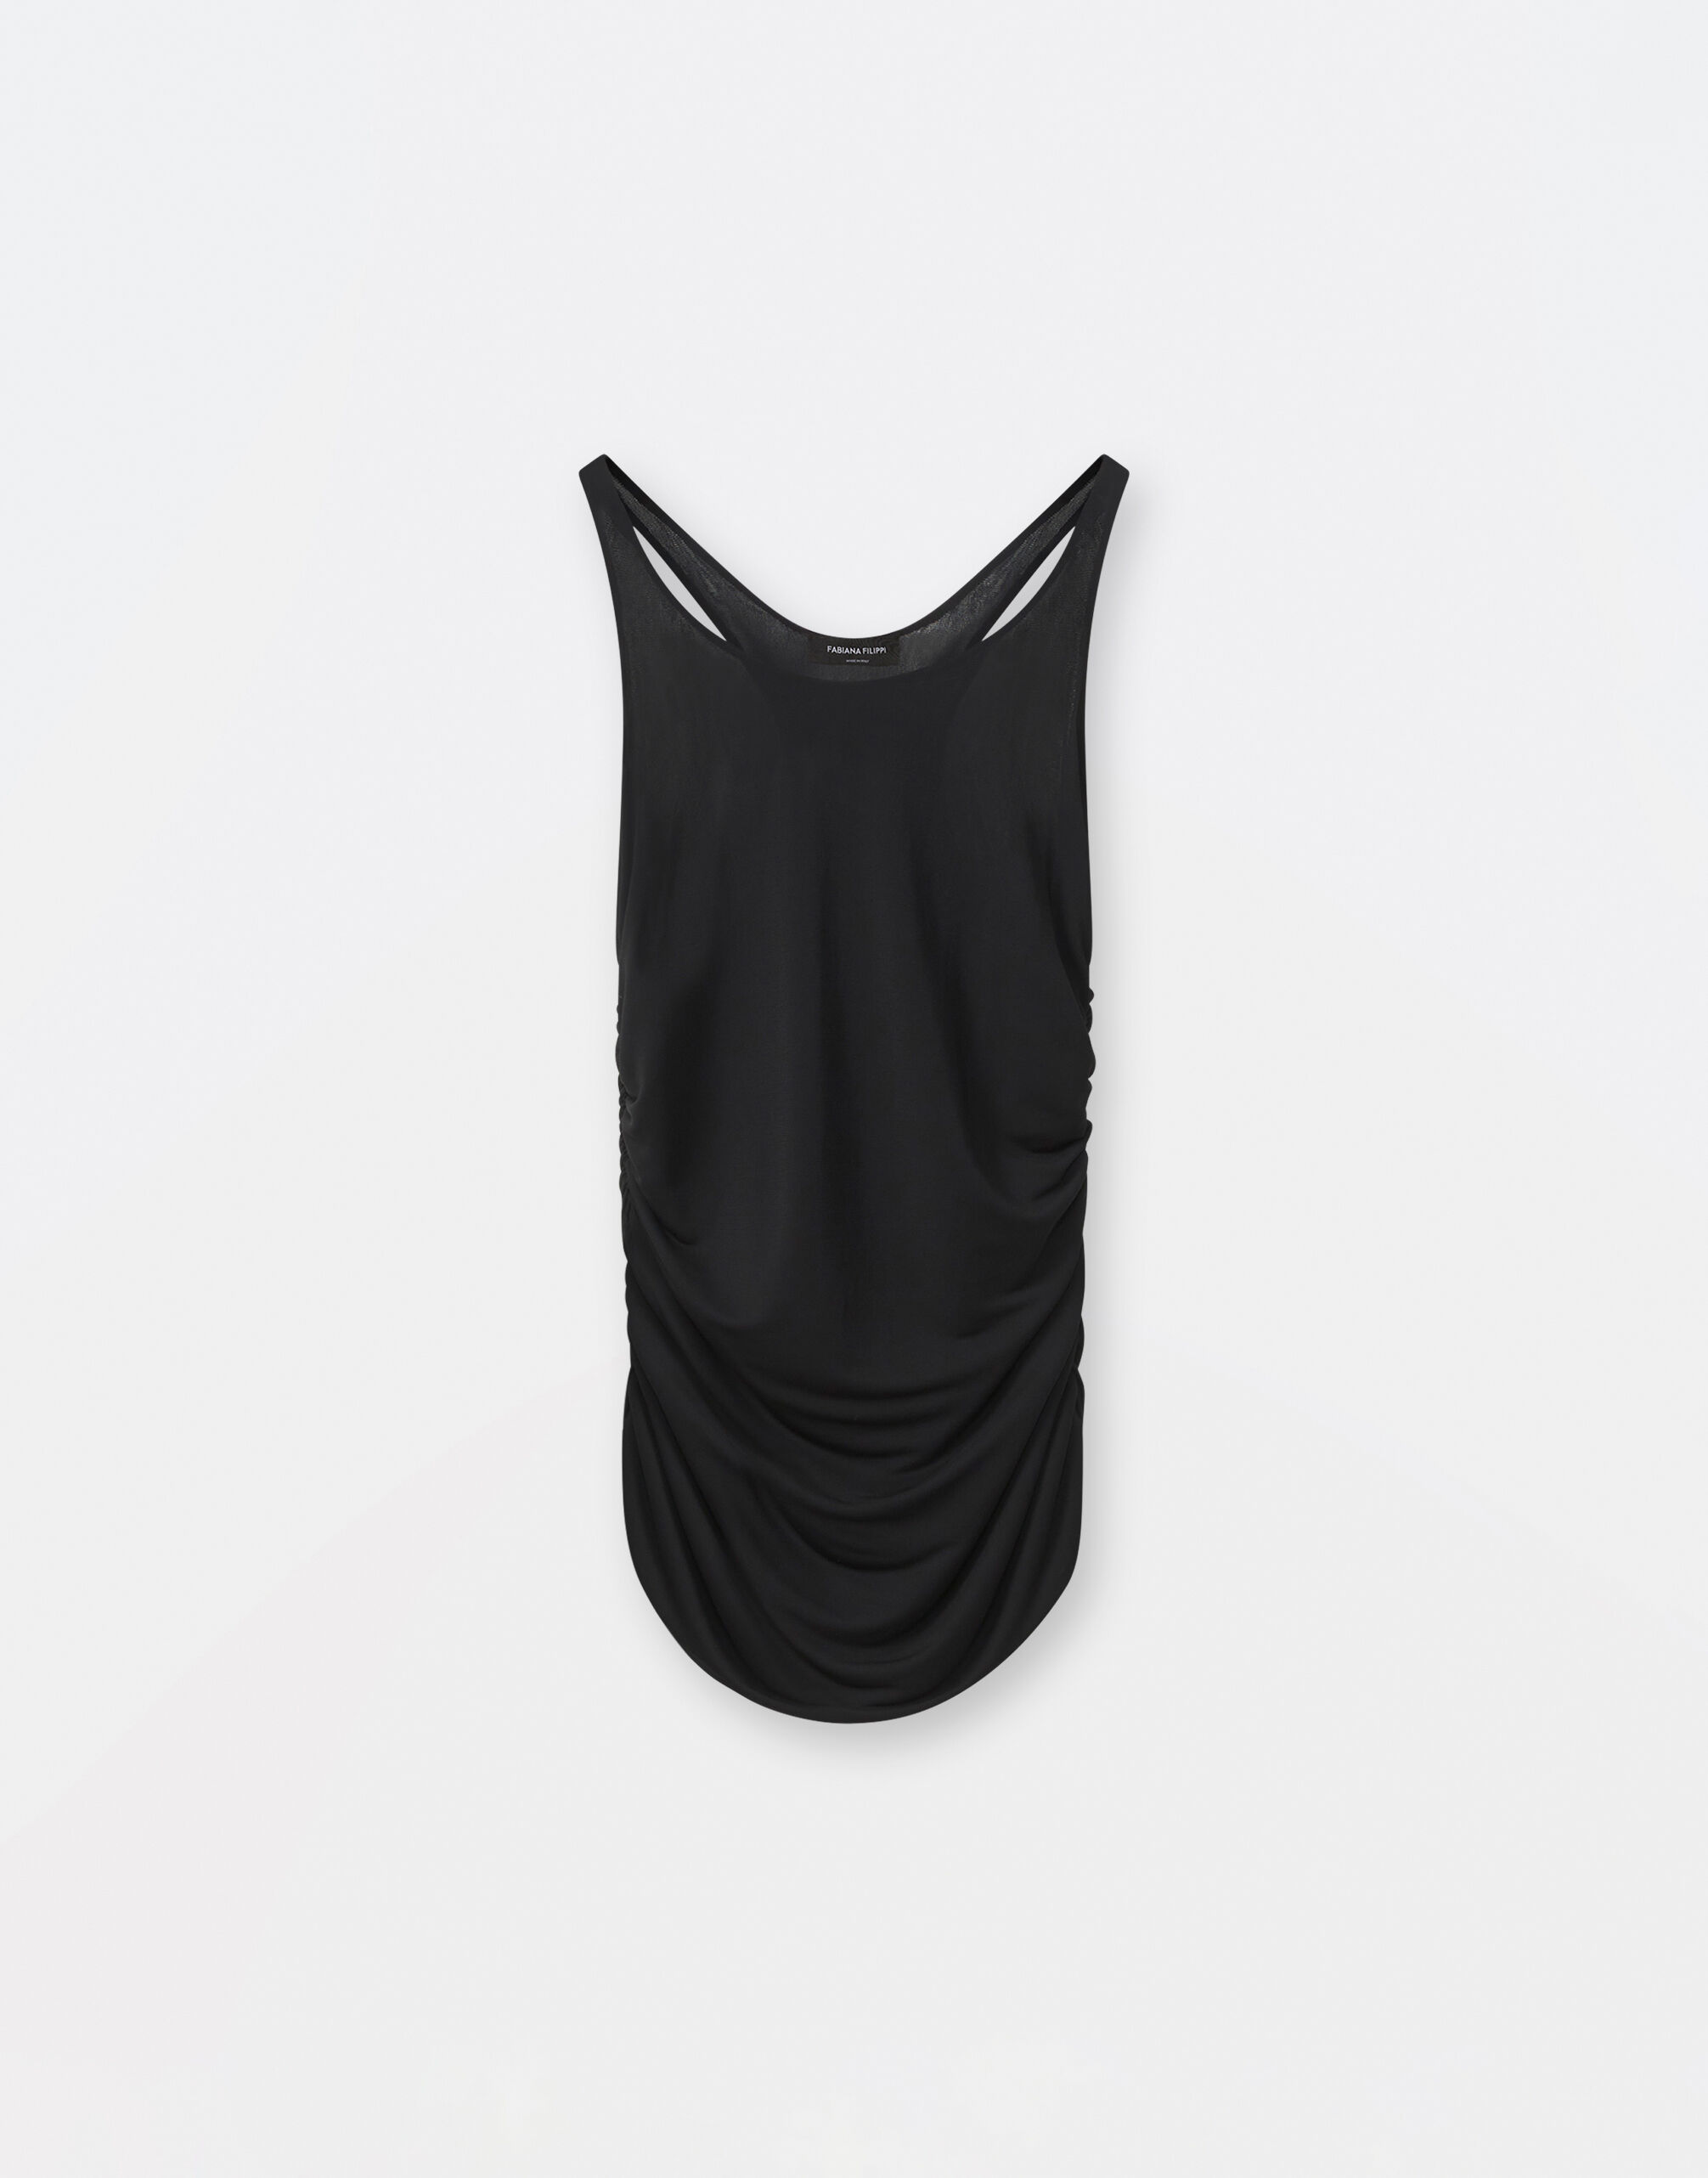 Fabiana Filippi Camiseta sin mangas en punto de viscosa, negro negro TPD264F218I9120000